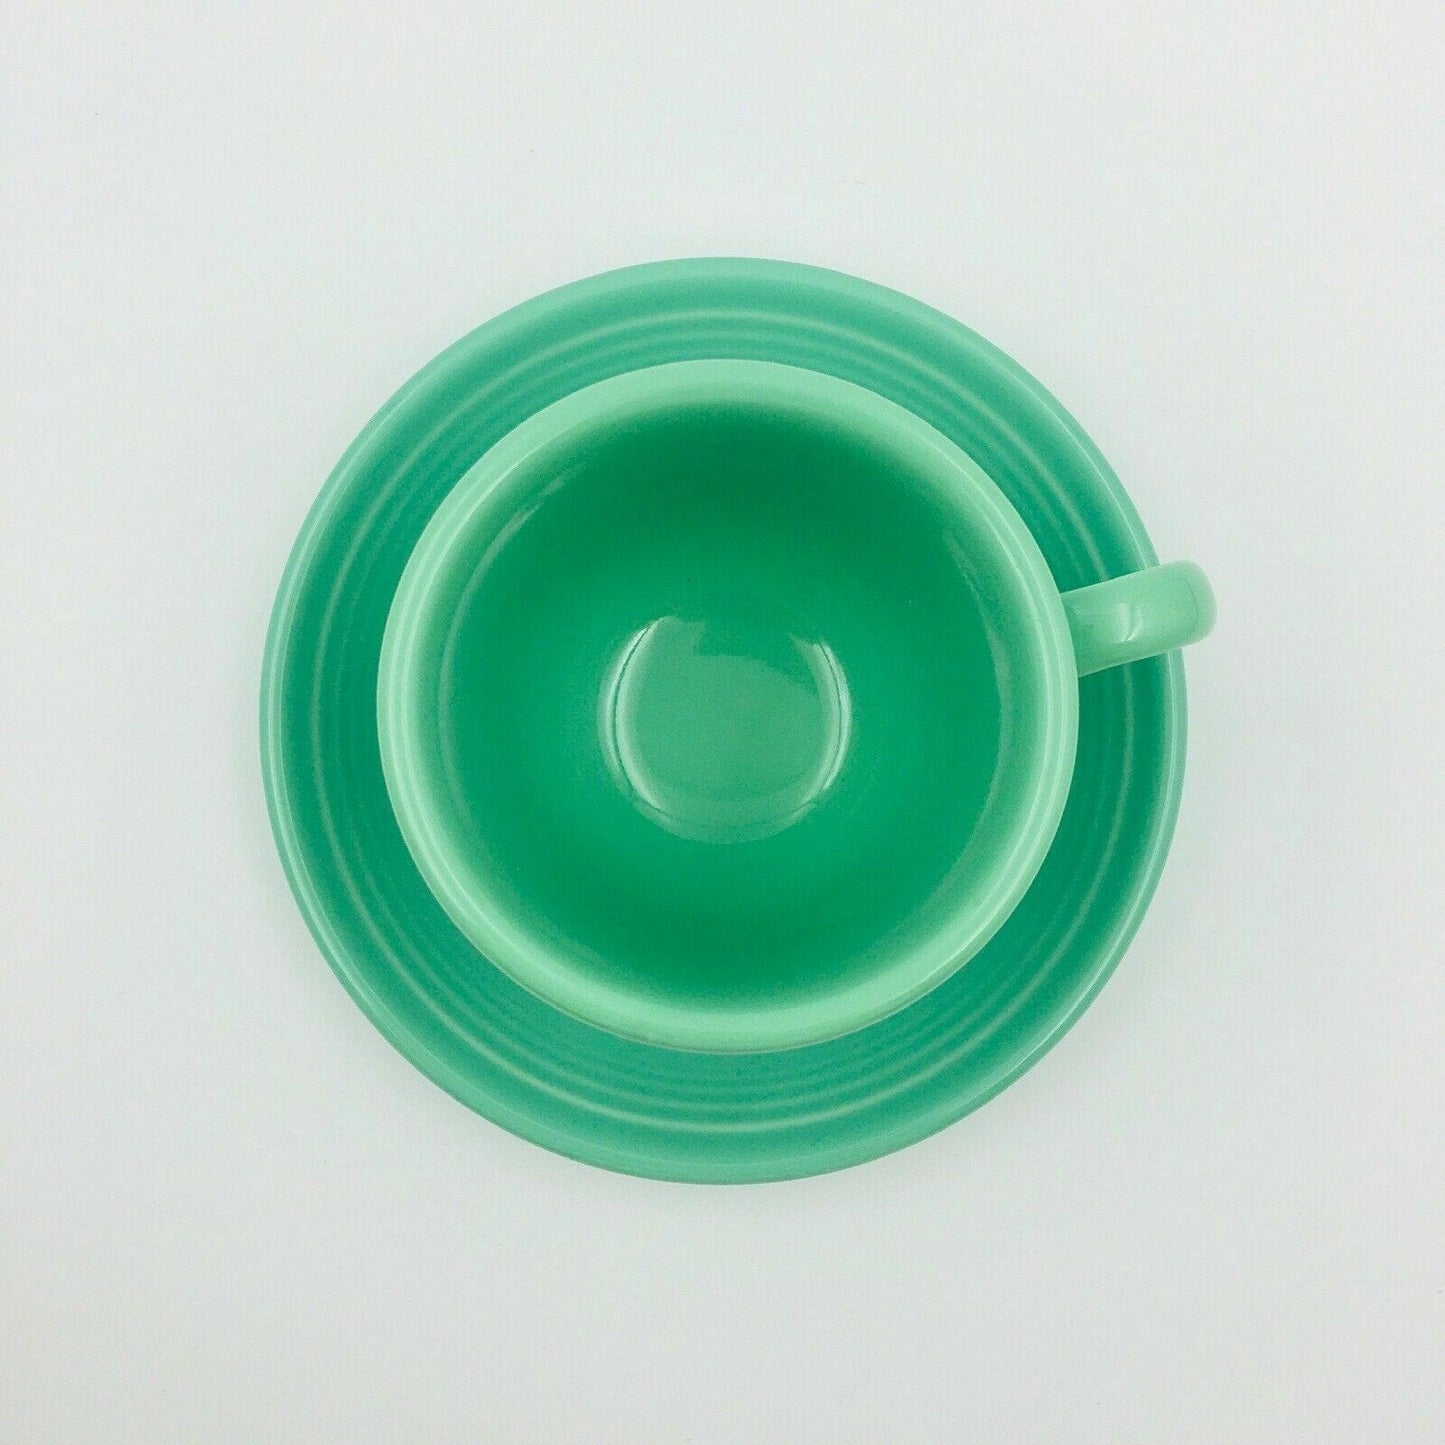 Fiesta Seafoam Green Replacement Tea Coffee Cup and Saucer Set Homer Laughlin Co USA.